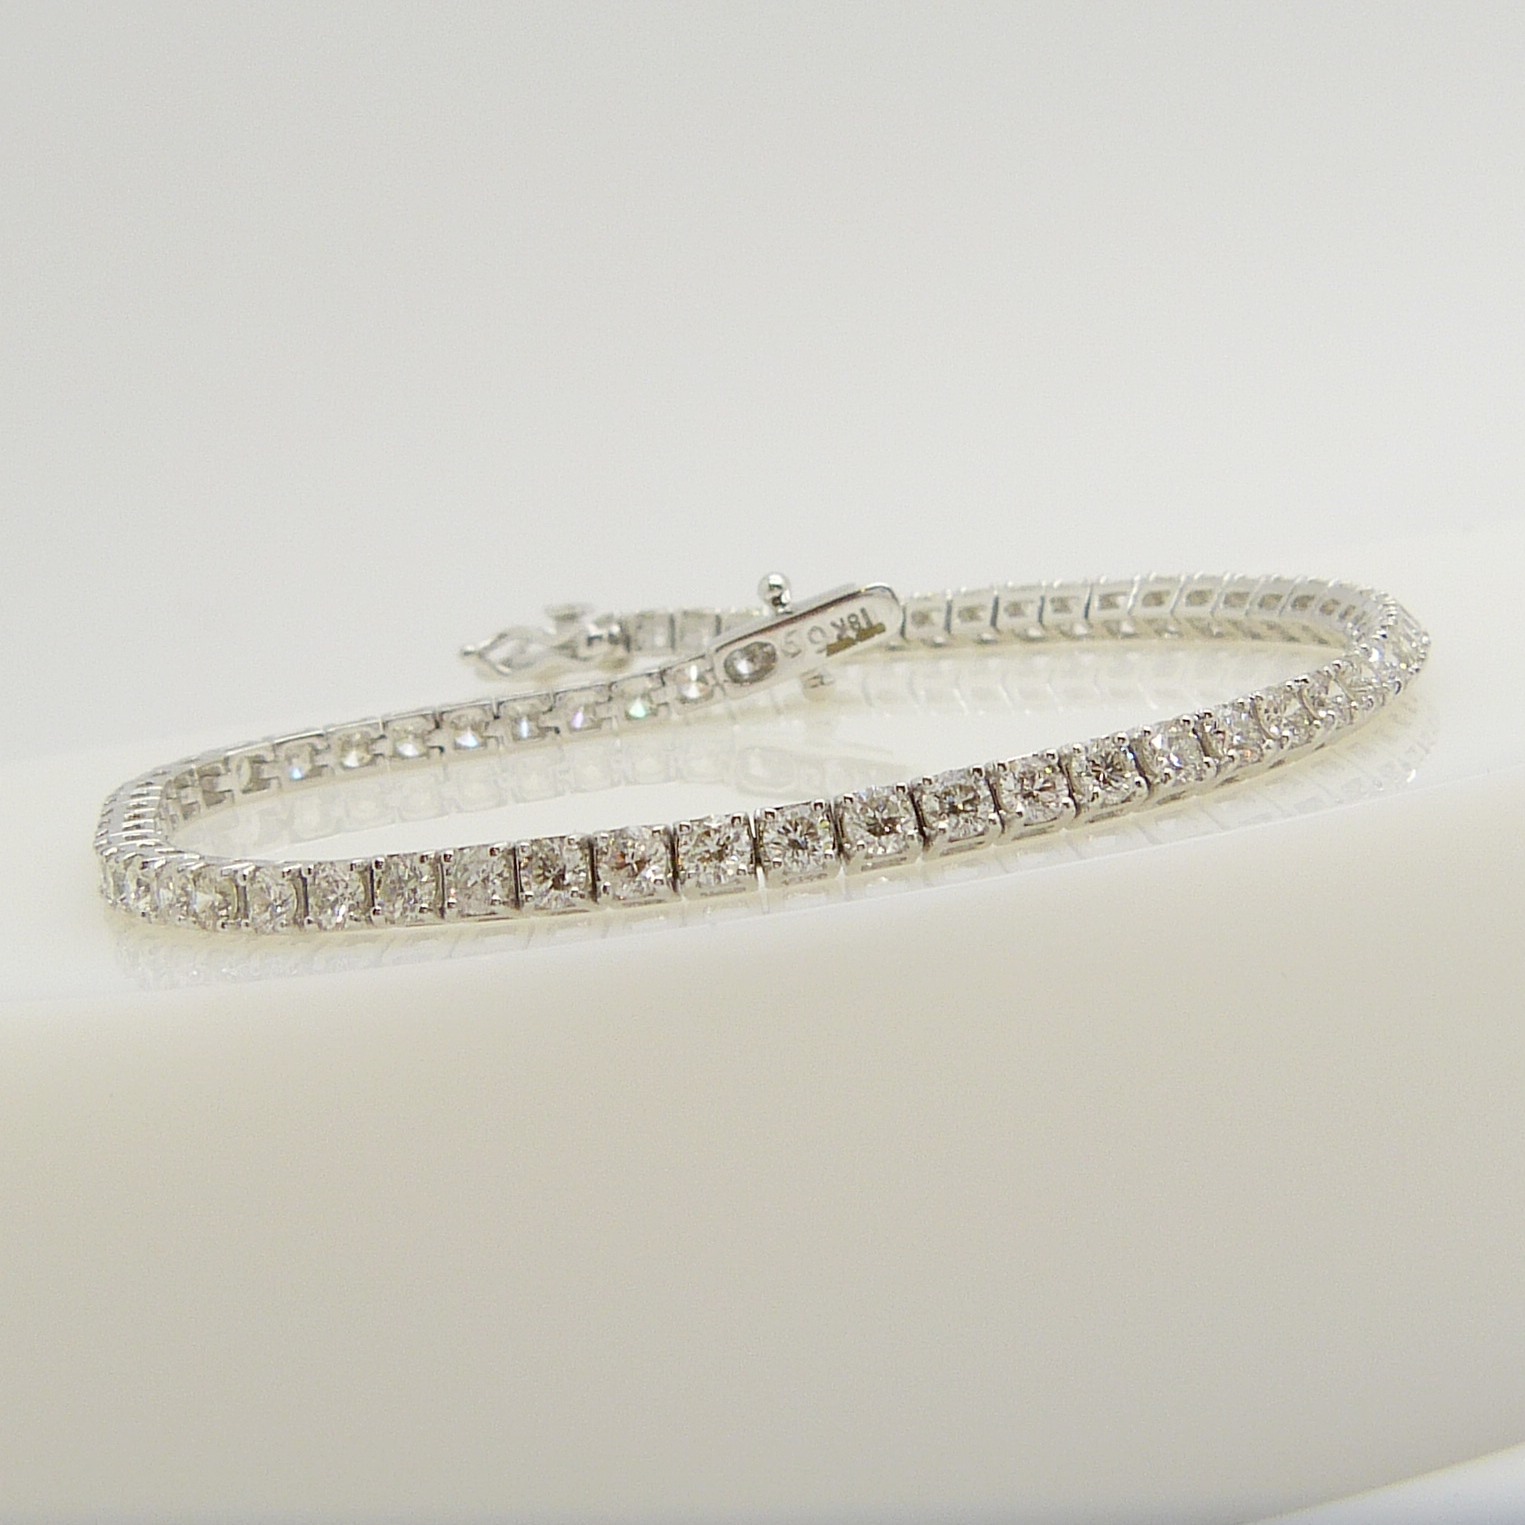 A stunning 18ct white gold 4.00 carat round brilliant-cut diamond line bracelet, boxed.